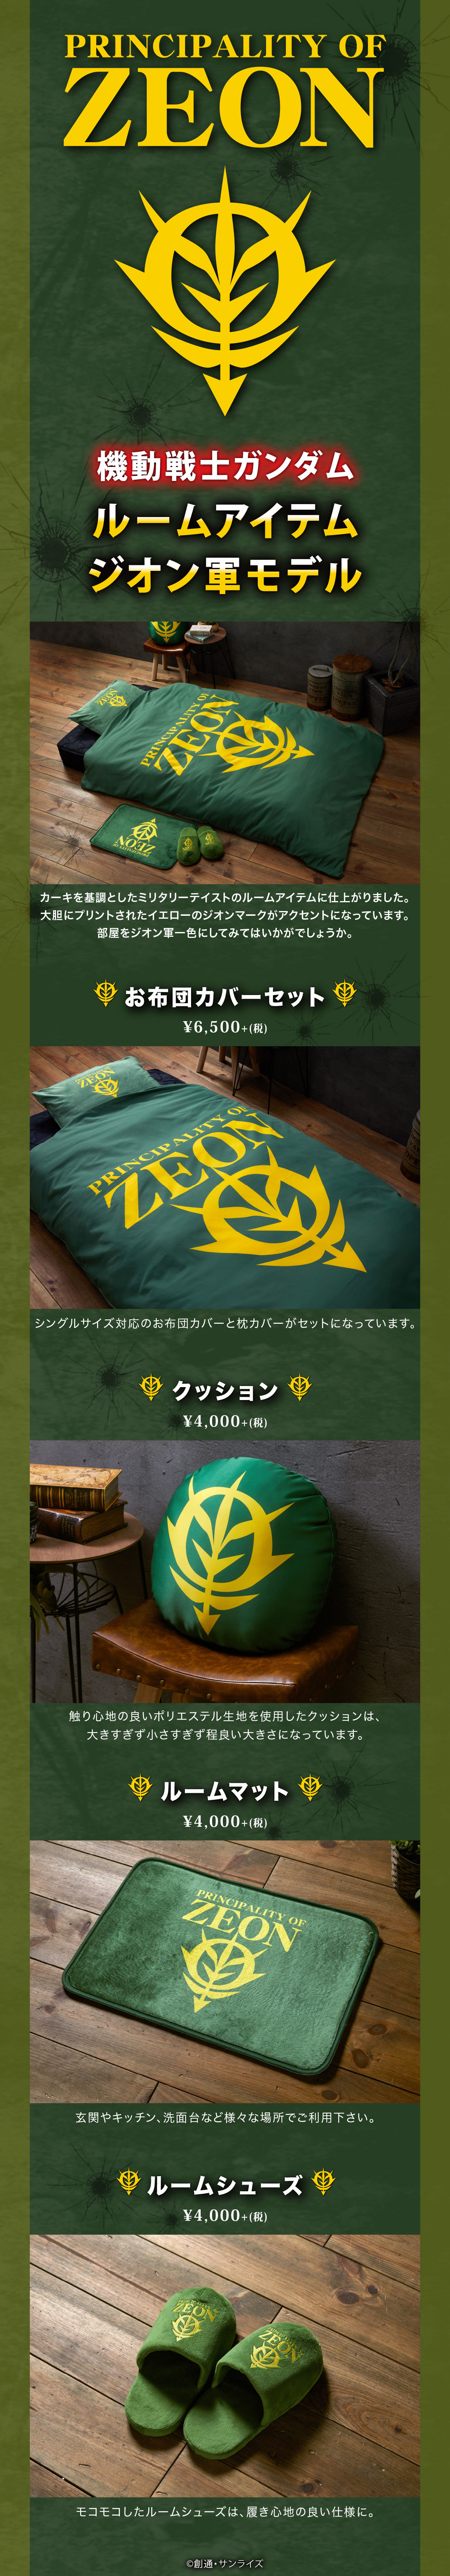 Mobile Suit Gundam Room Pillow(Principality of ZEON)